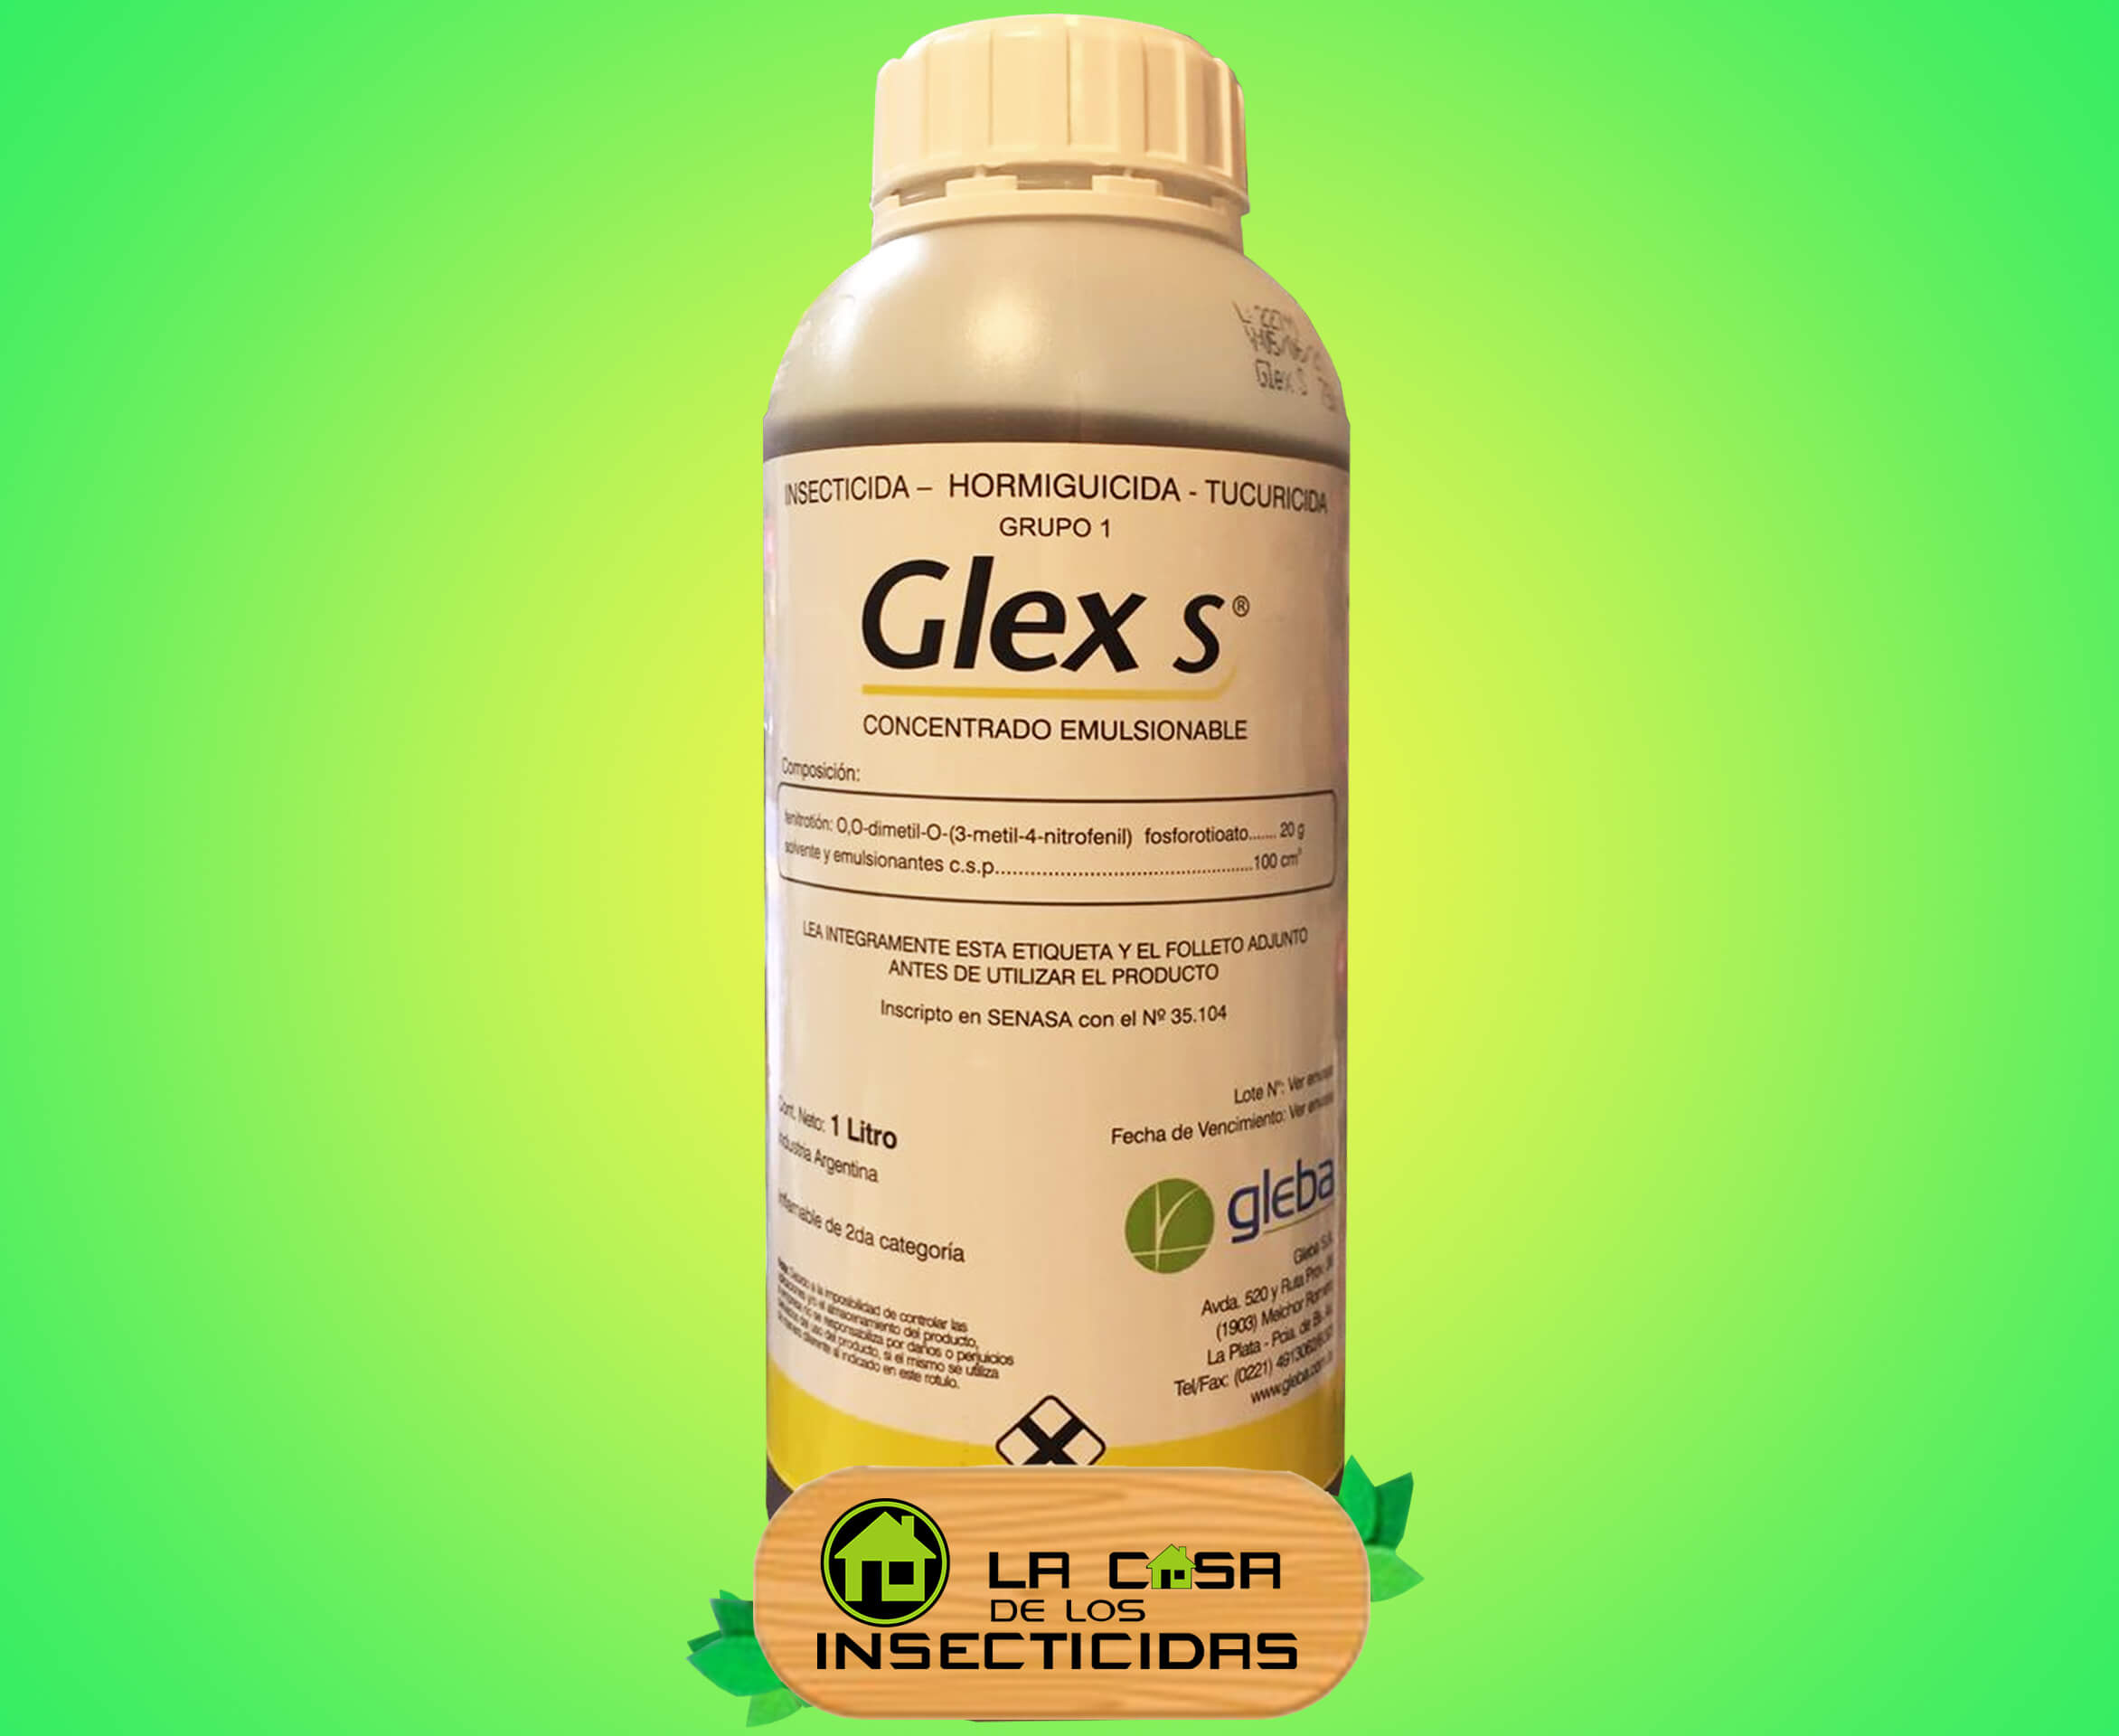 Glex S Hormiguicida insecticida control de hormigas 1Lt